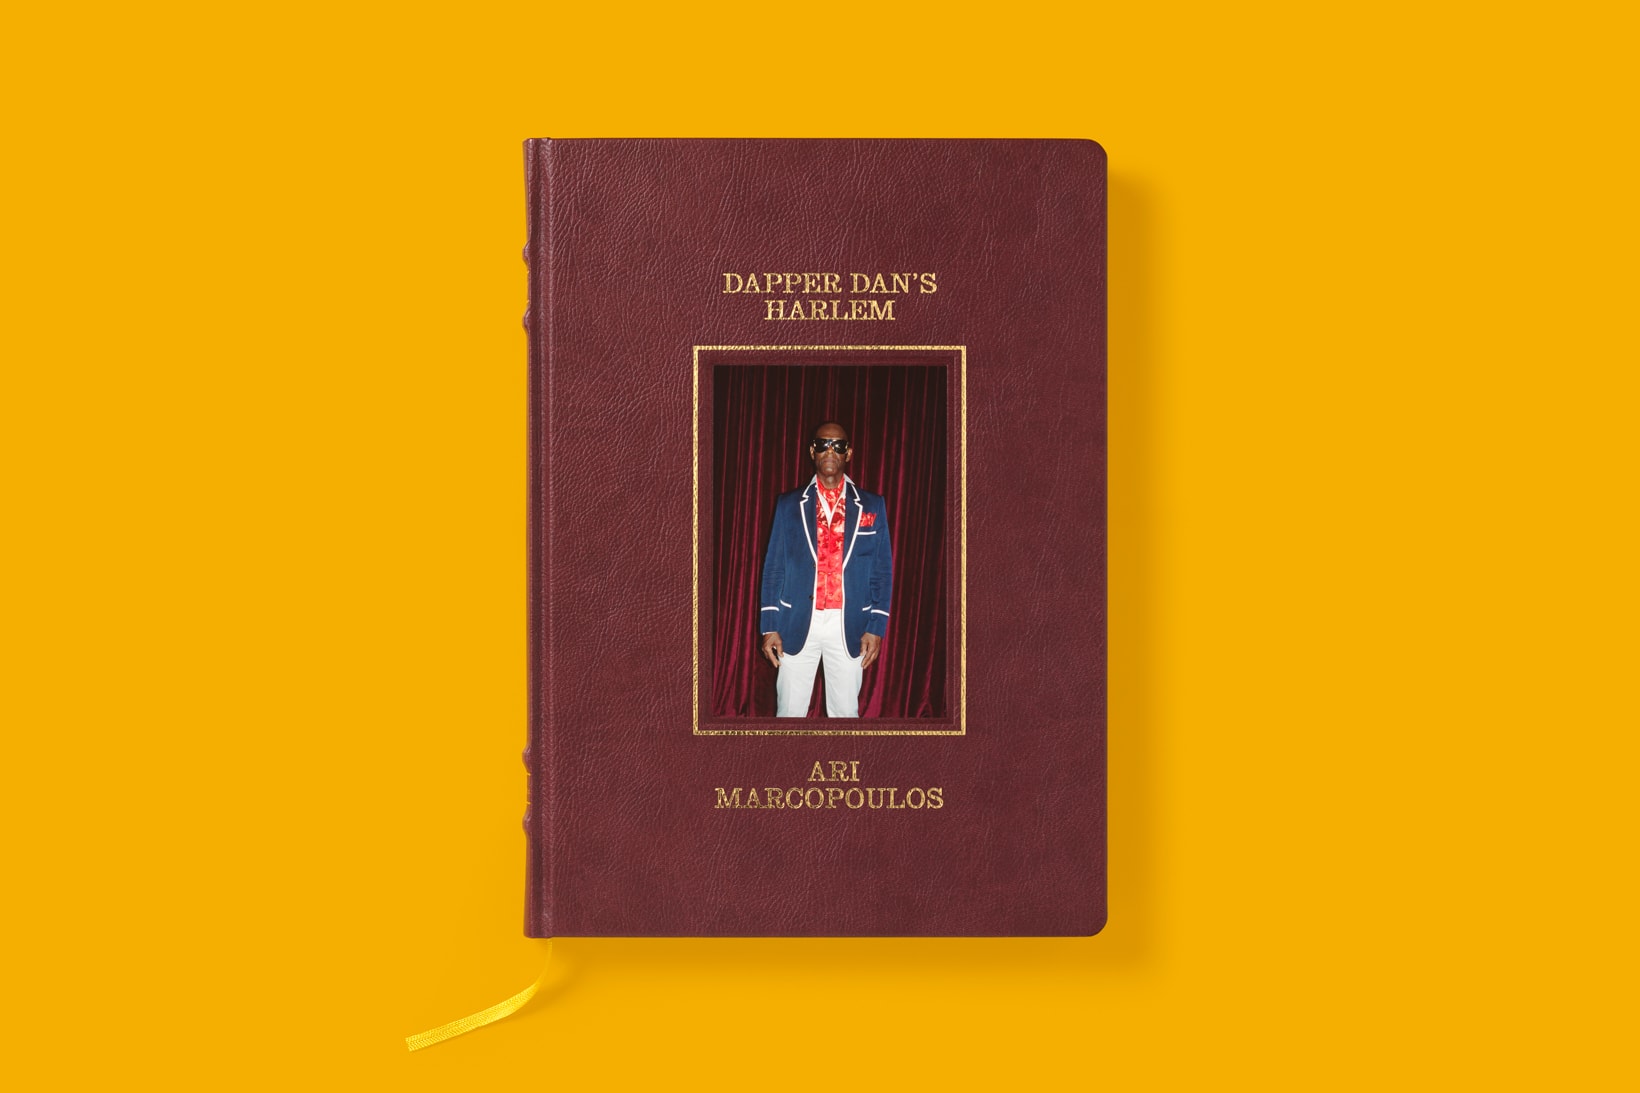 Gucci Dapper Dan's Harlem Book Ari Marcopolous Cover